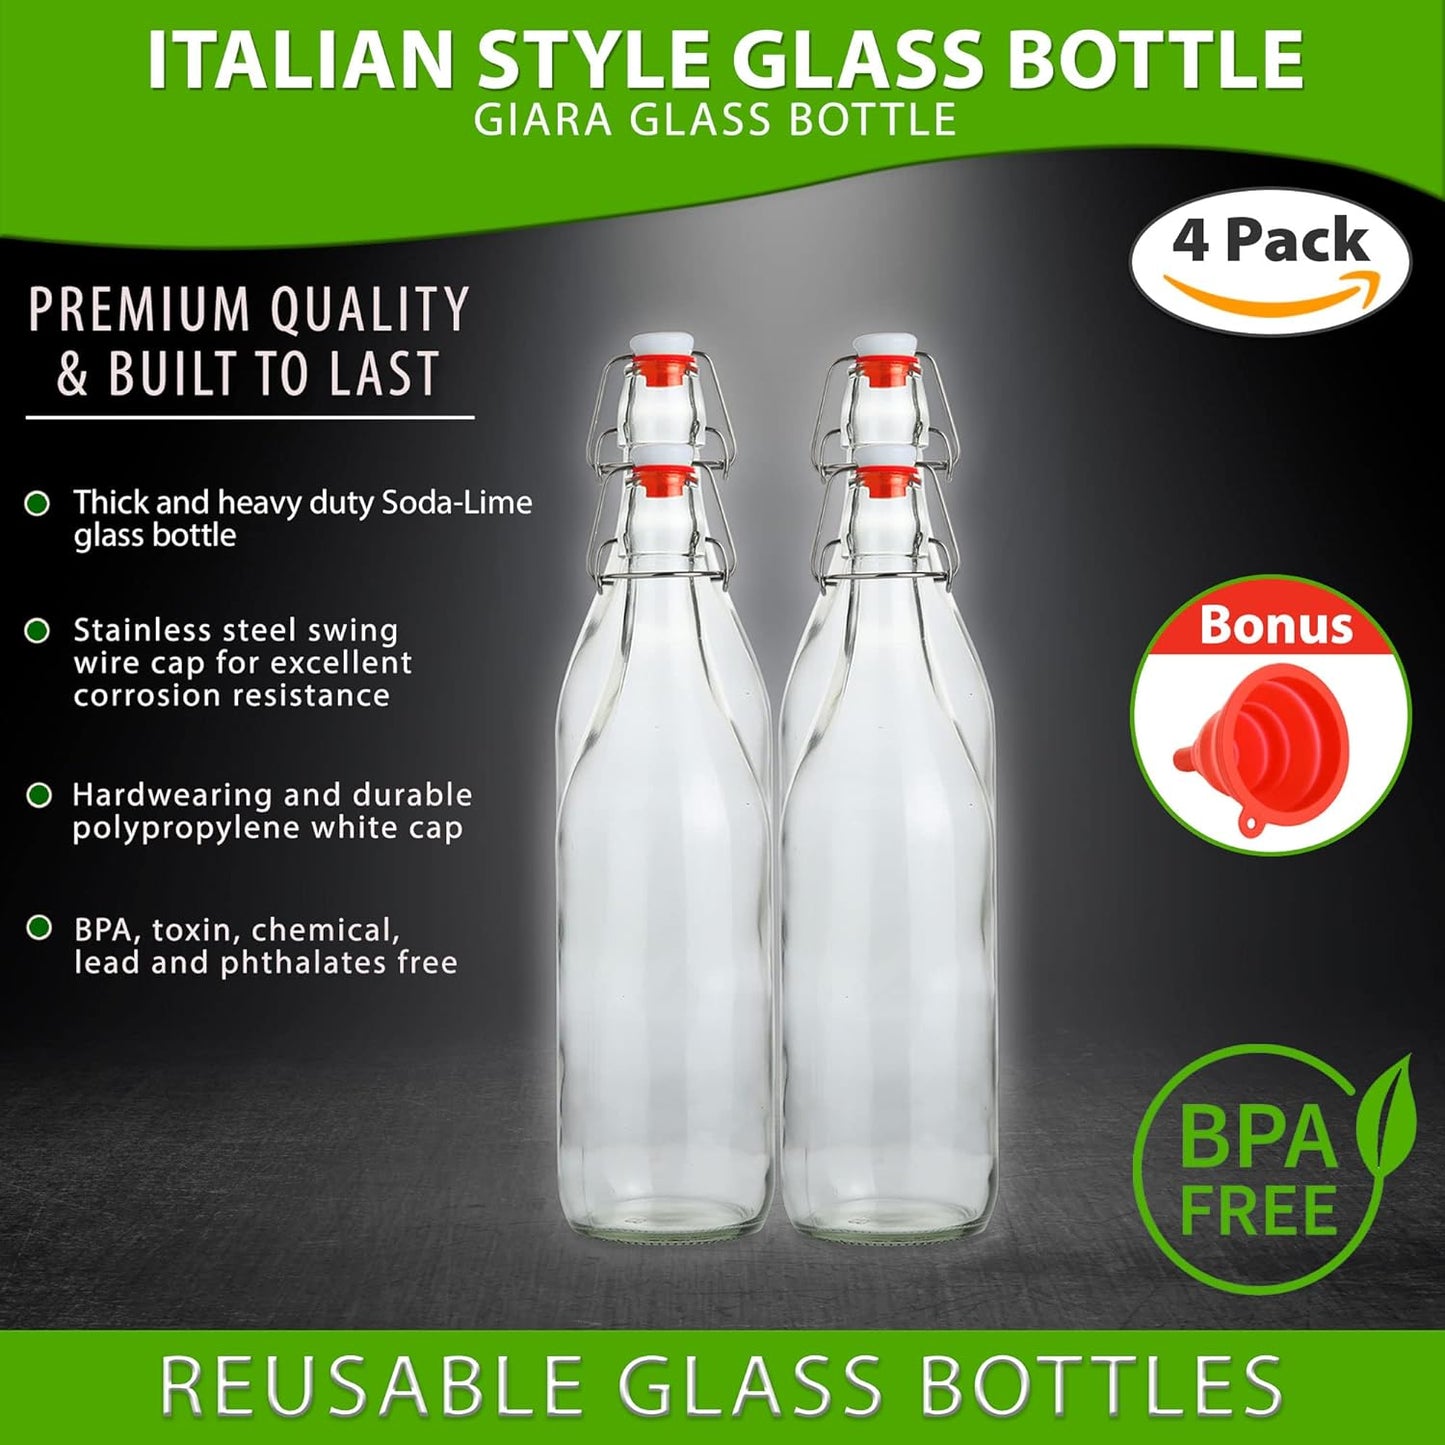 AYL Flip Top Glass Bottle [9 fl. oz.] [Pack of 8]-Glass Brewing Bottle-Swing Top Bottles for Carbonated Drinks,Kombucha,Kefir, Soda, Juice, Fermentation, Salad Dressing, Coquito, Syrup & Home Brewing